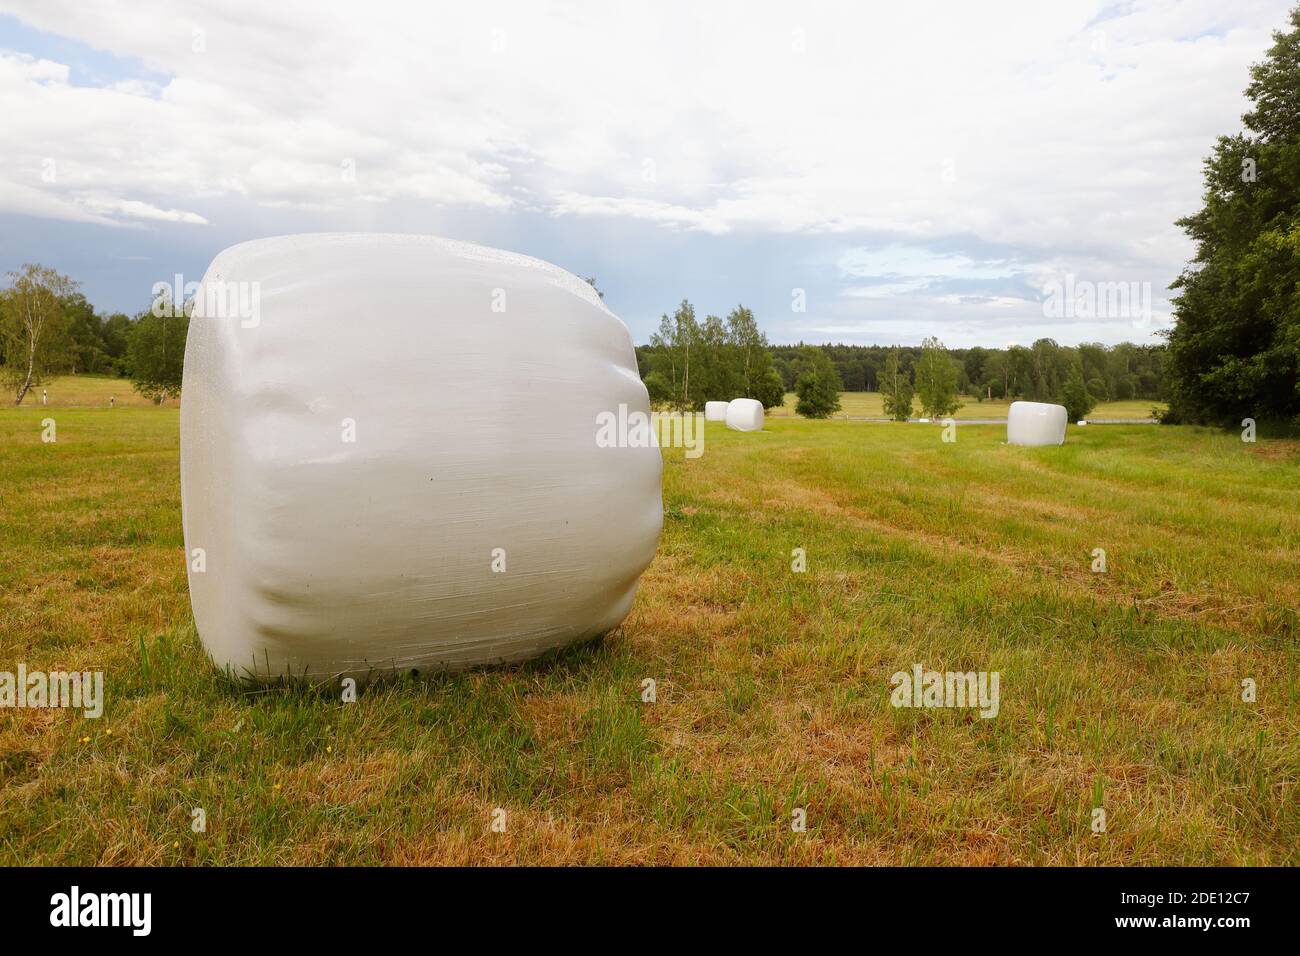 Feld mit weißen Silageballen in Kunststoffverpackung. Stockfoto